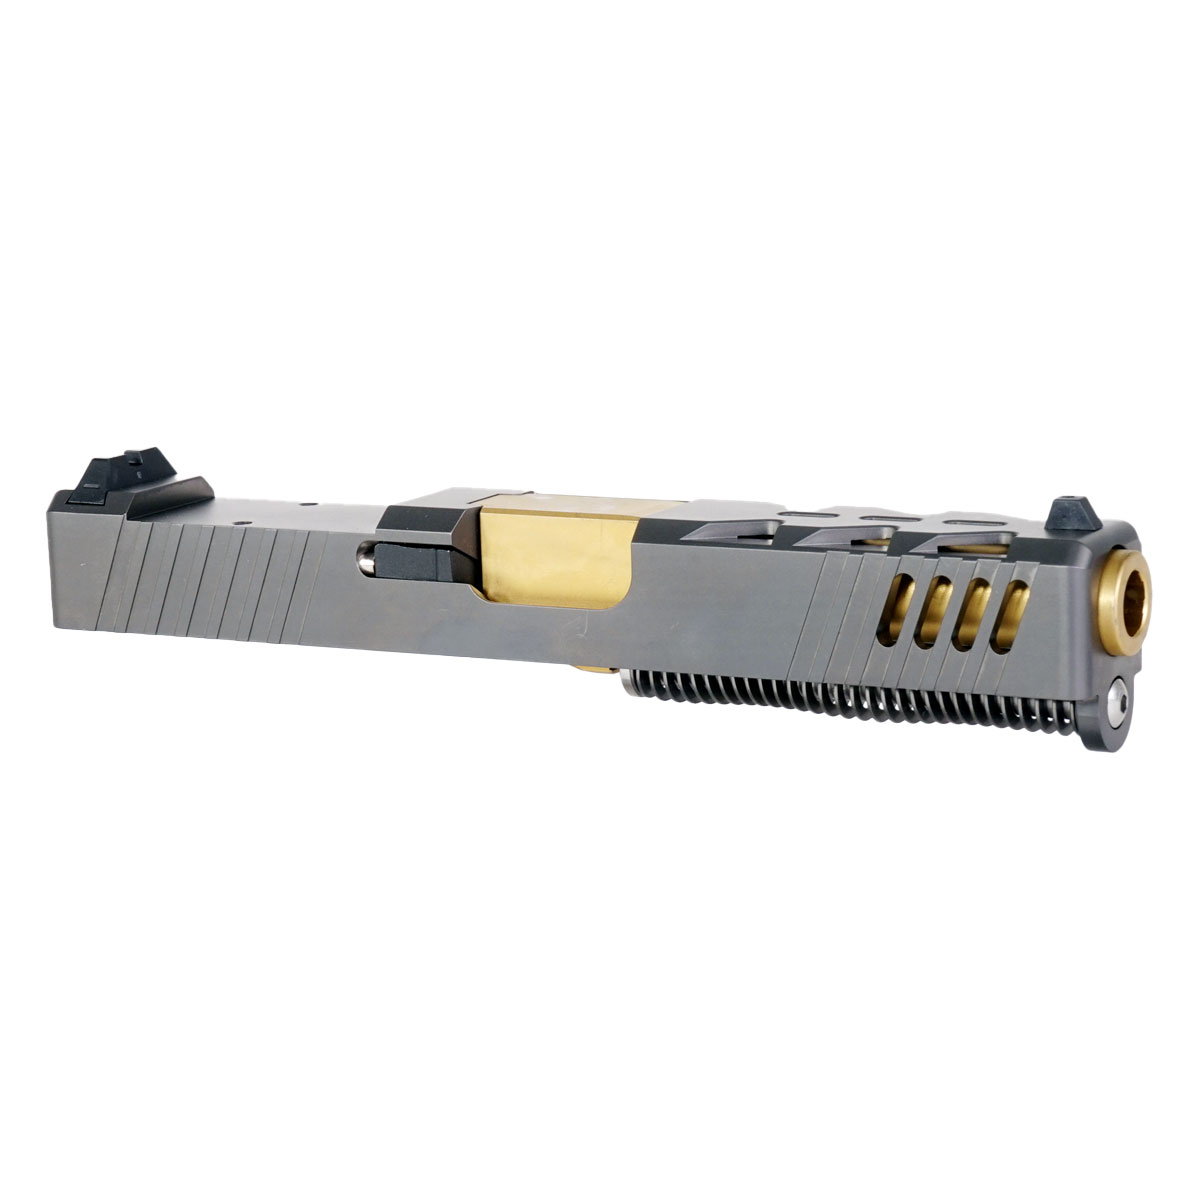 MMC 'The Talon' 9mm Complete Slide Kit - Glock 19 Gen 1-3 Compatible